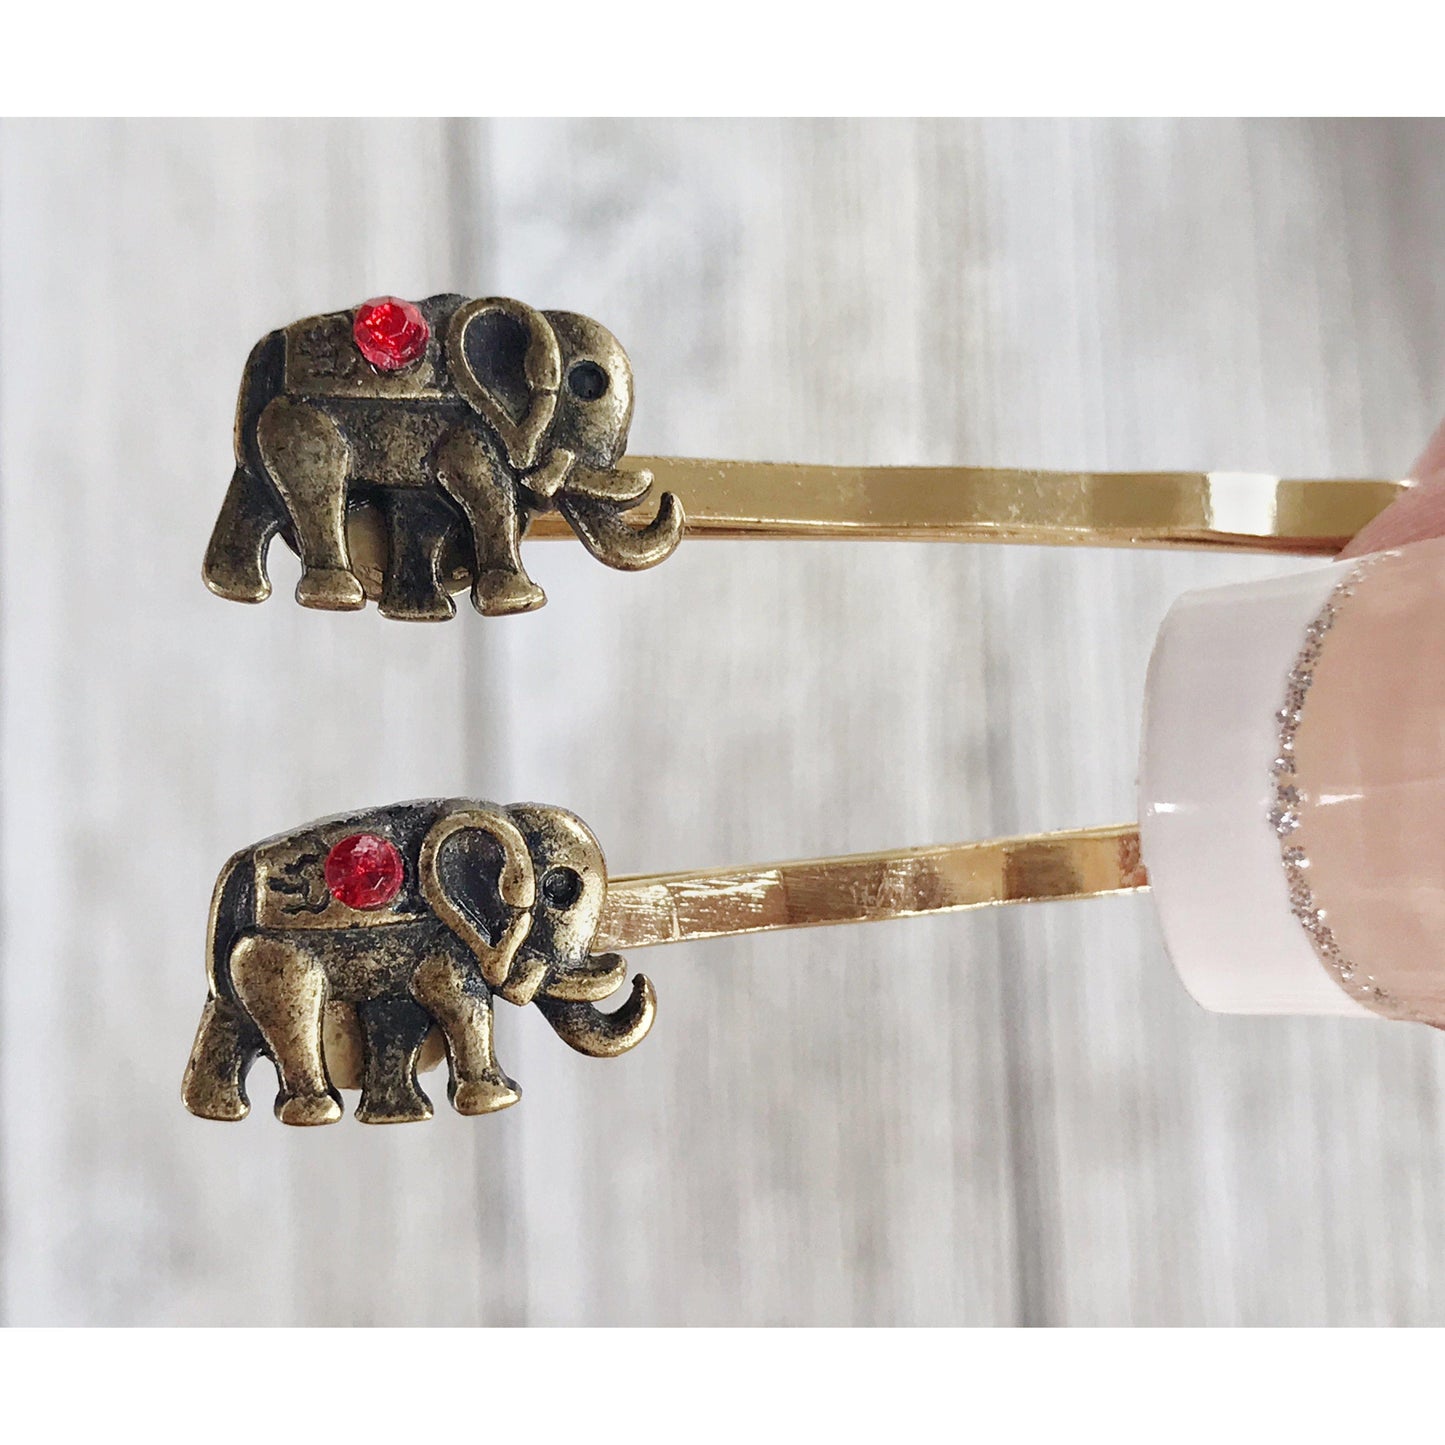 Tiny Bronze Rhinestone Elephant Bobby Pins: Adorable Animal-inspired Accessories